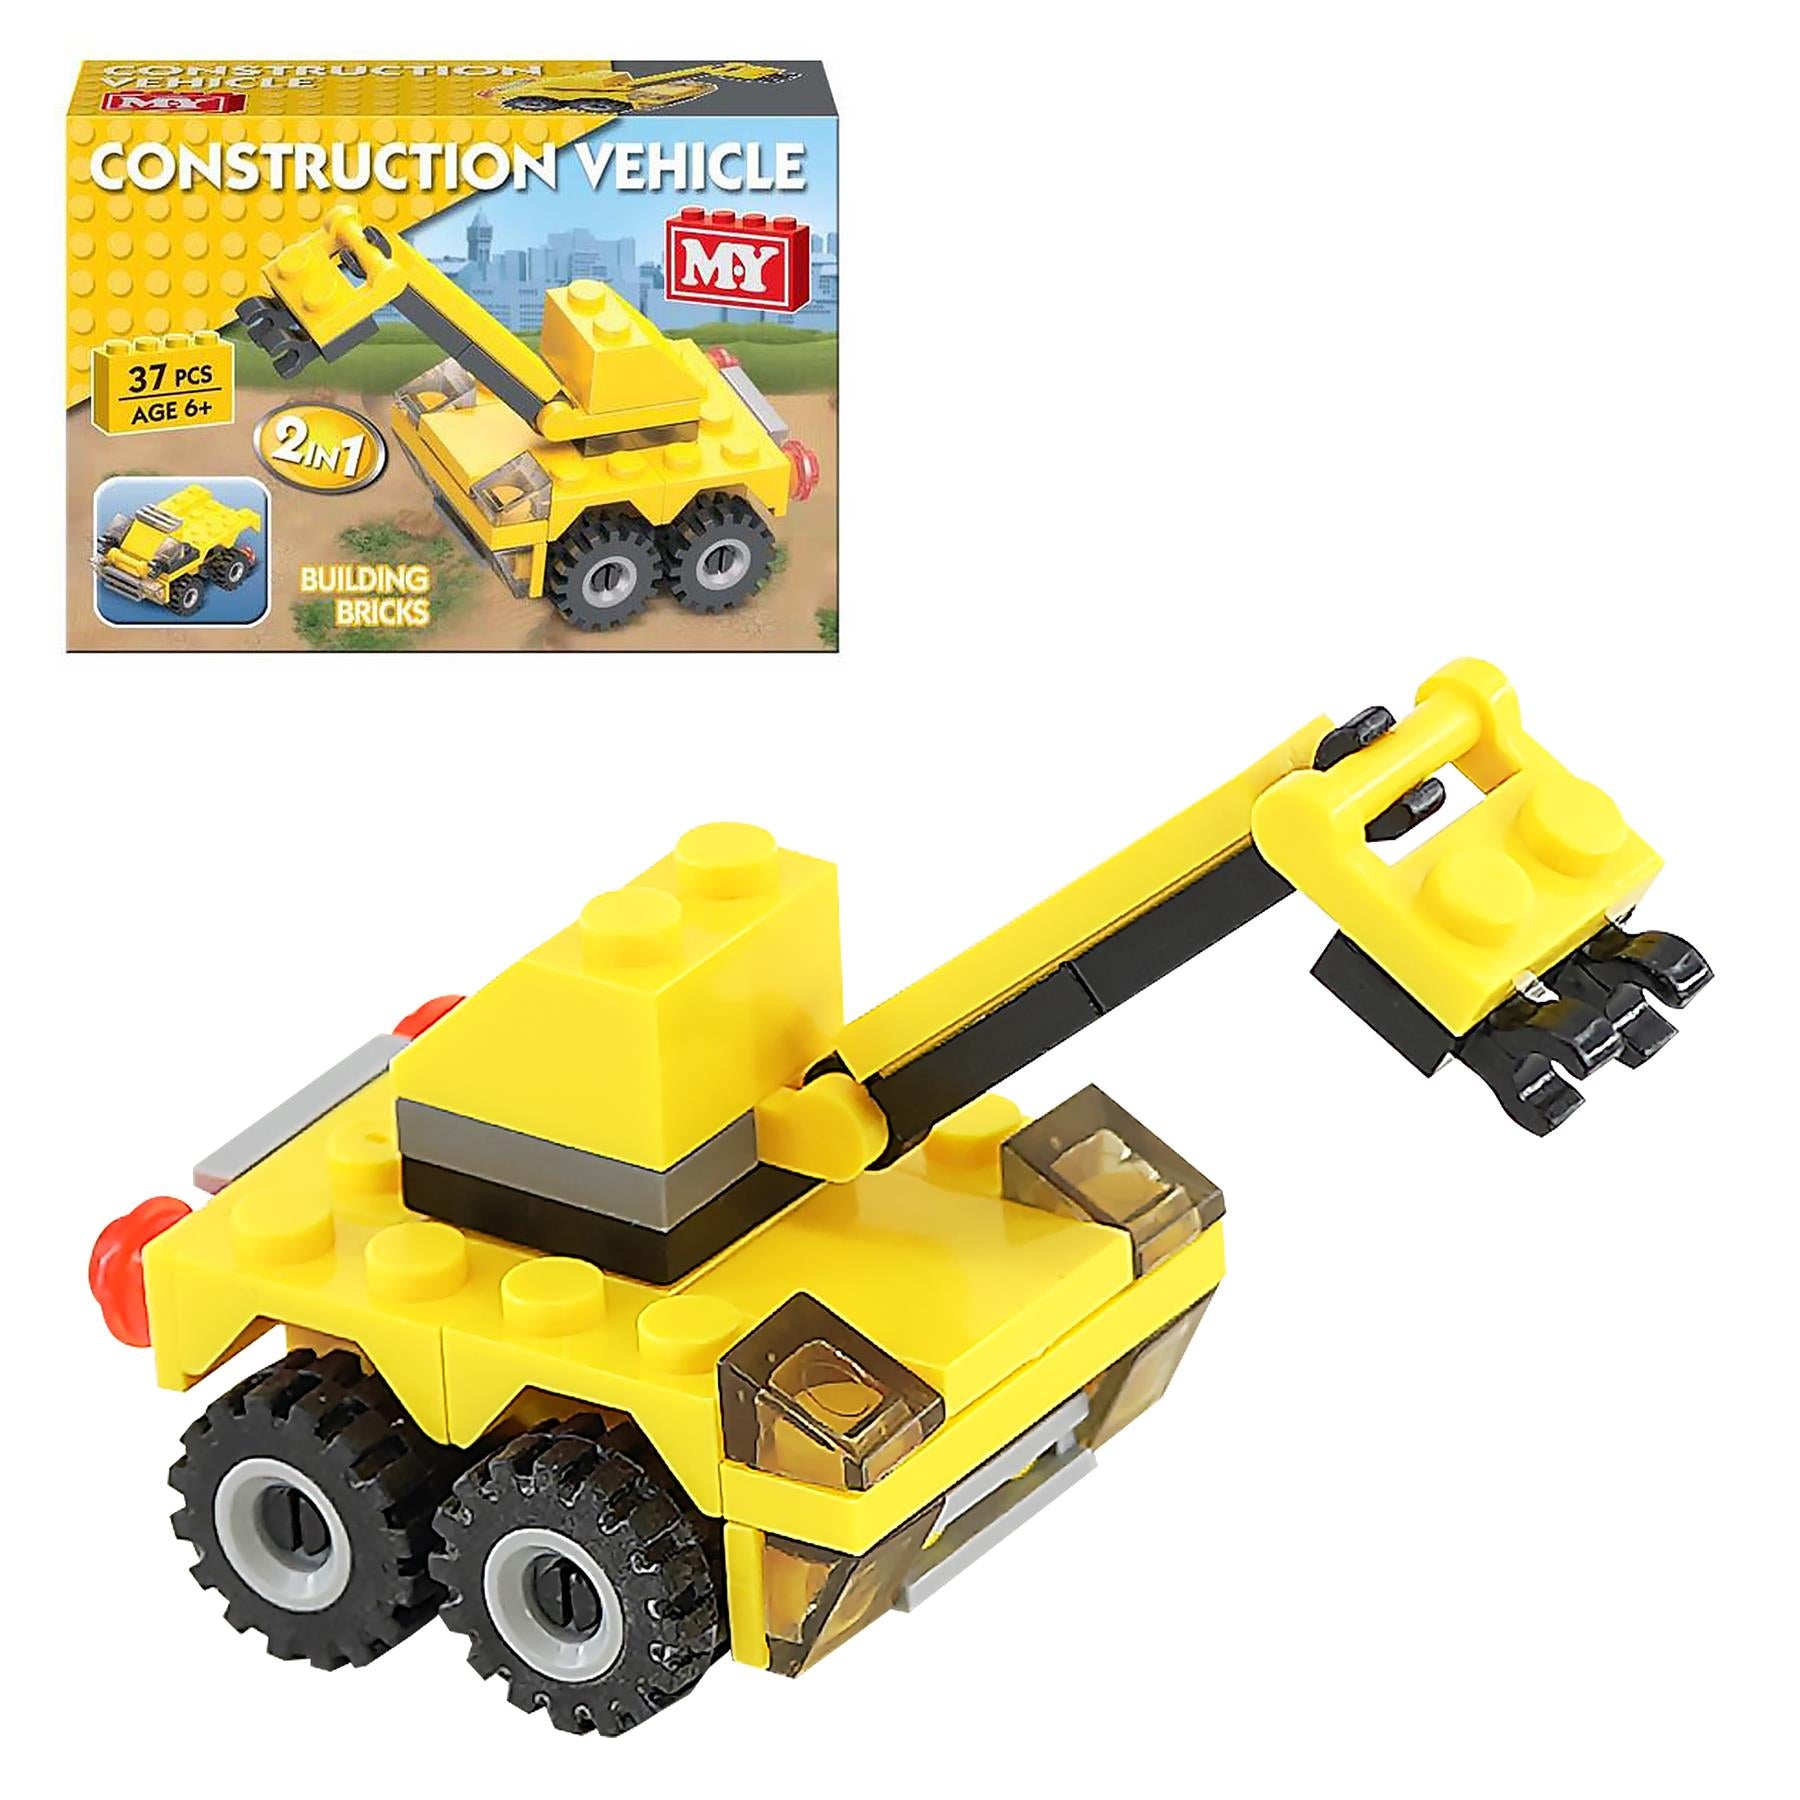 The Magic Toy Shop Building Bricks Construction Vehicles Building Bricks 2 in 1